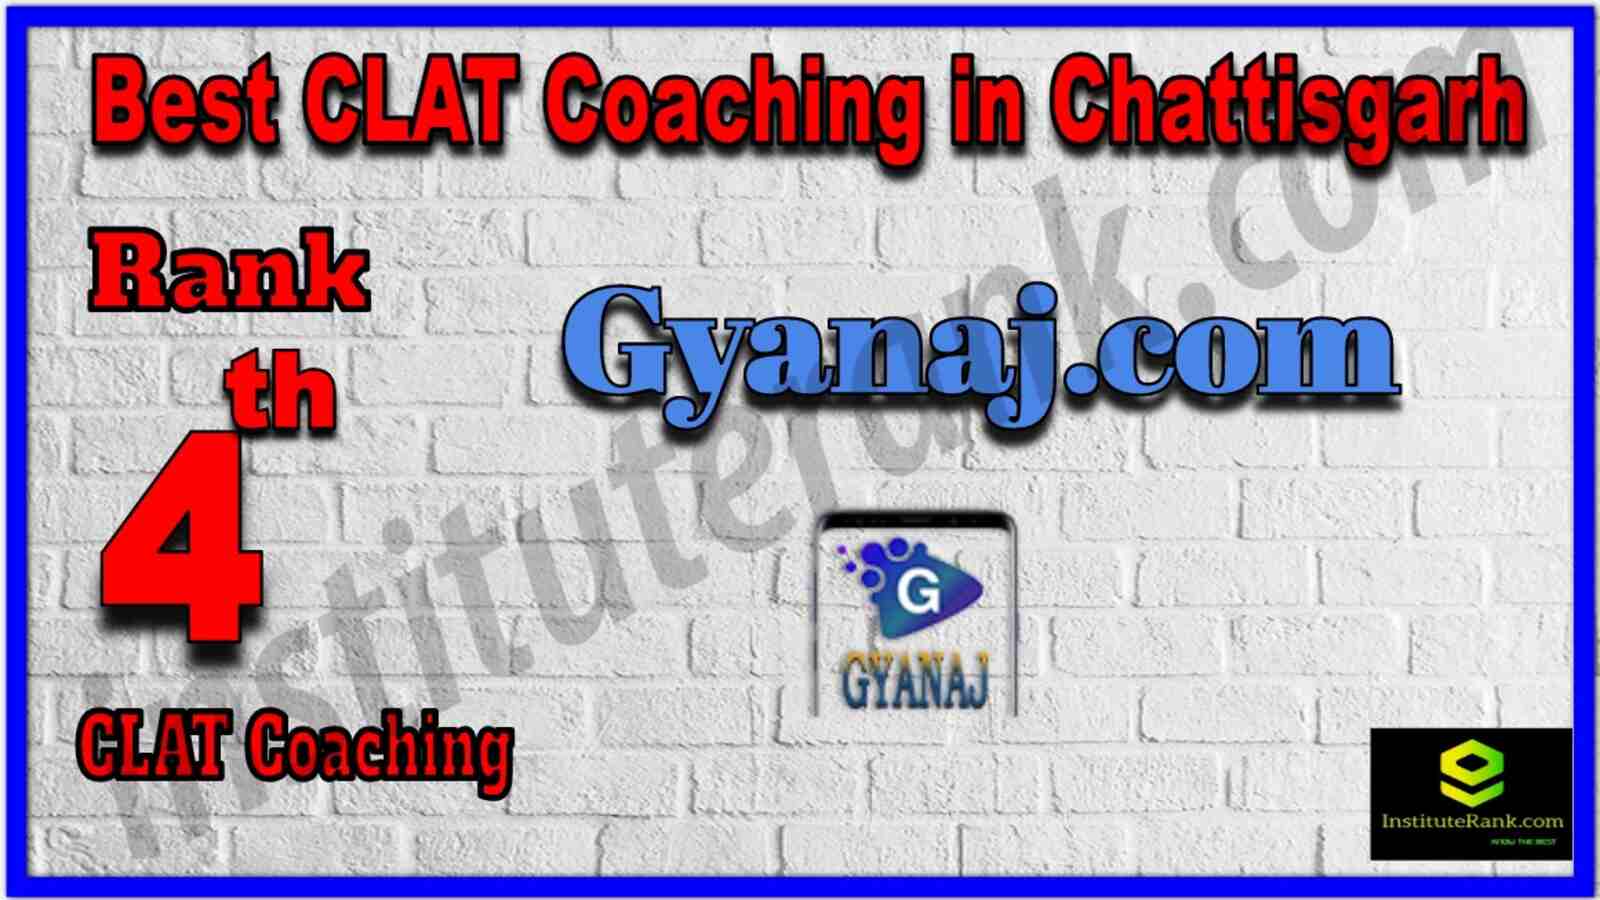 Rank 4 Best CLAT Coaching in Chattisgarh